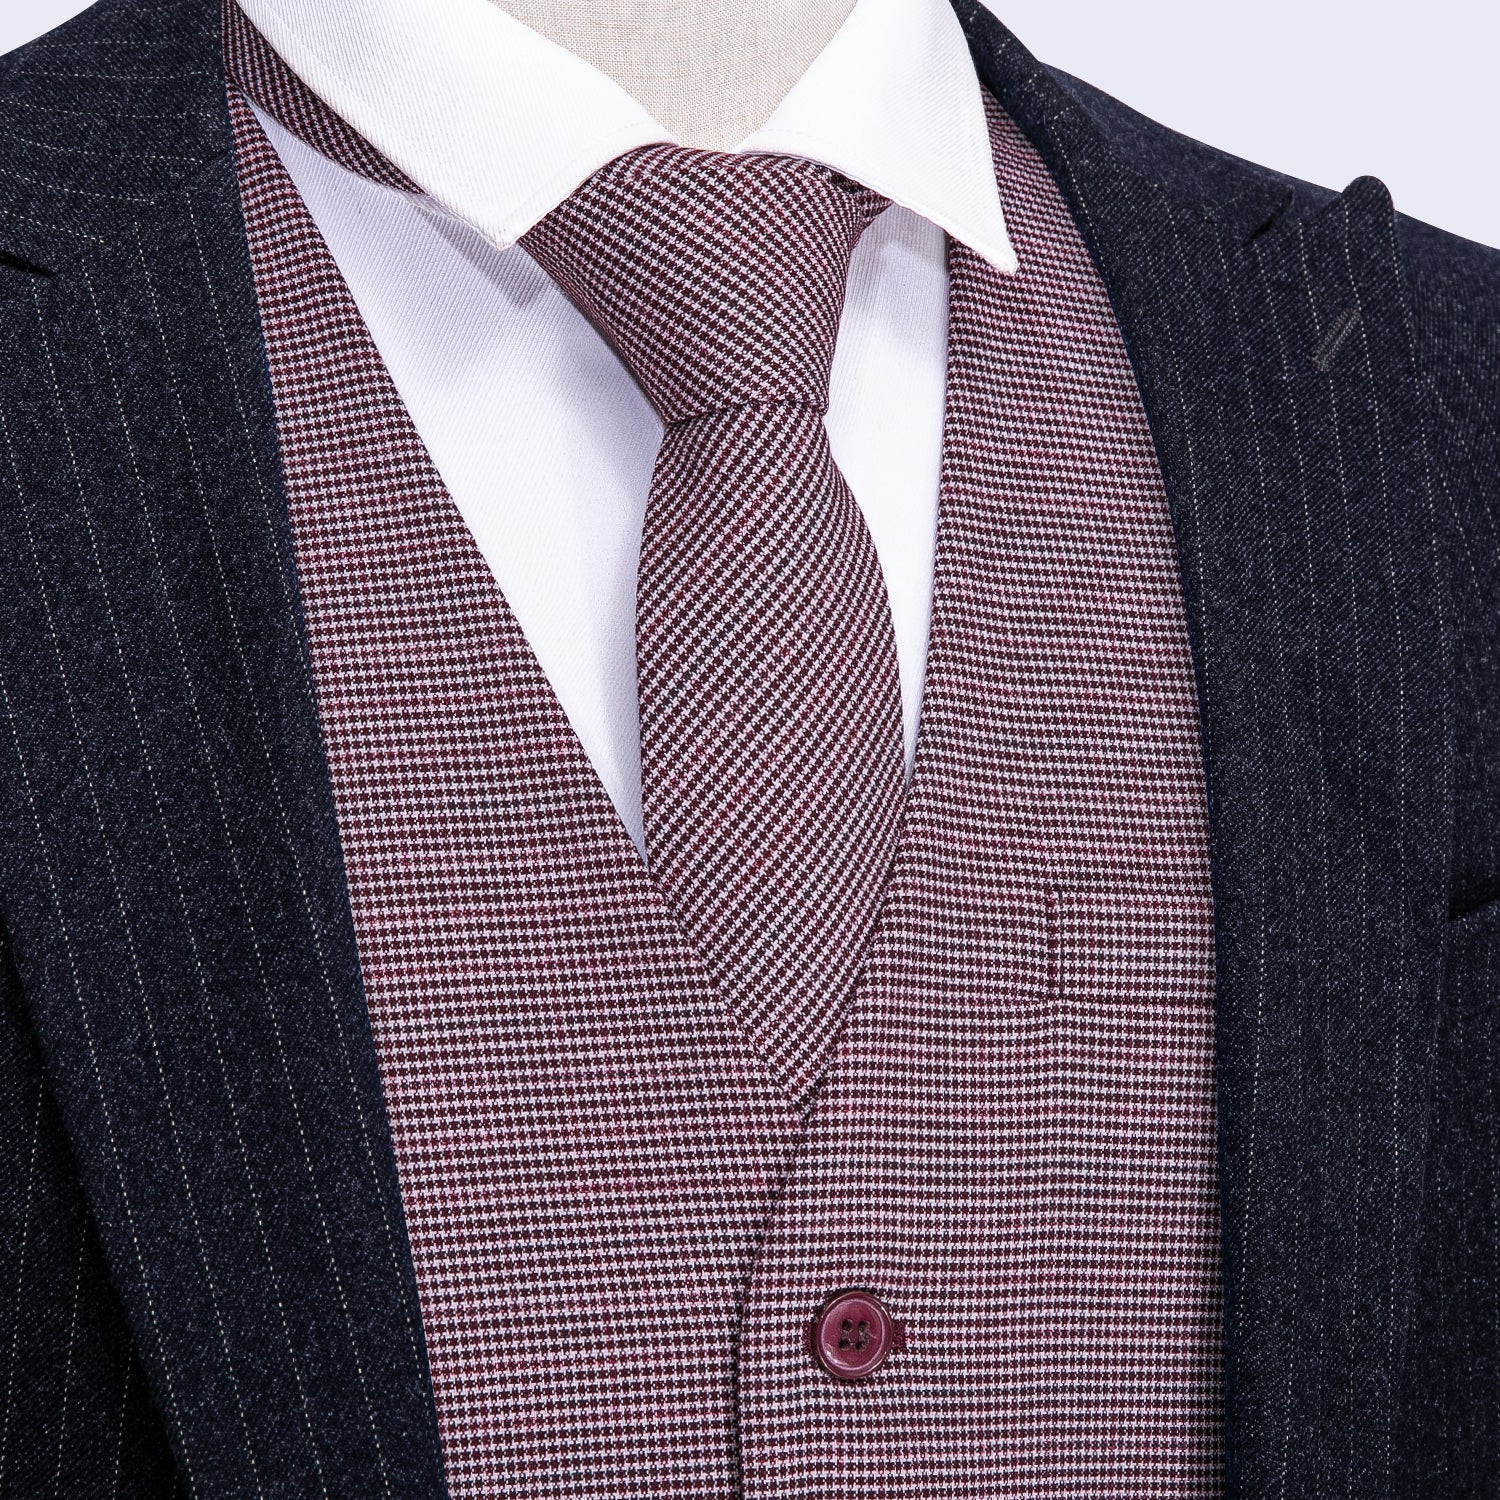 Novelty Pink Houndstooth Silk Vest Necktie Set for Wedding